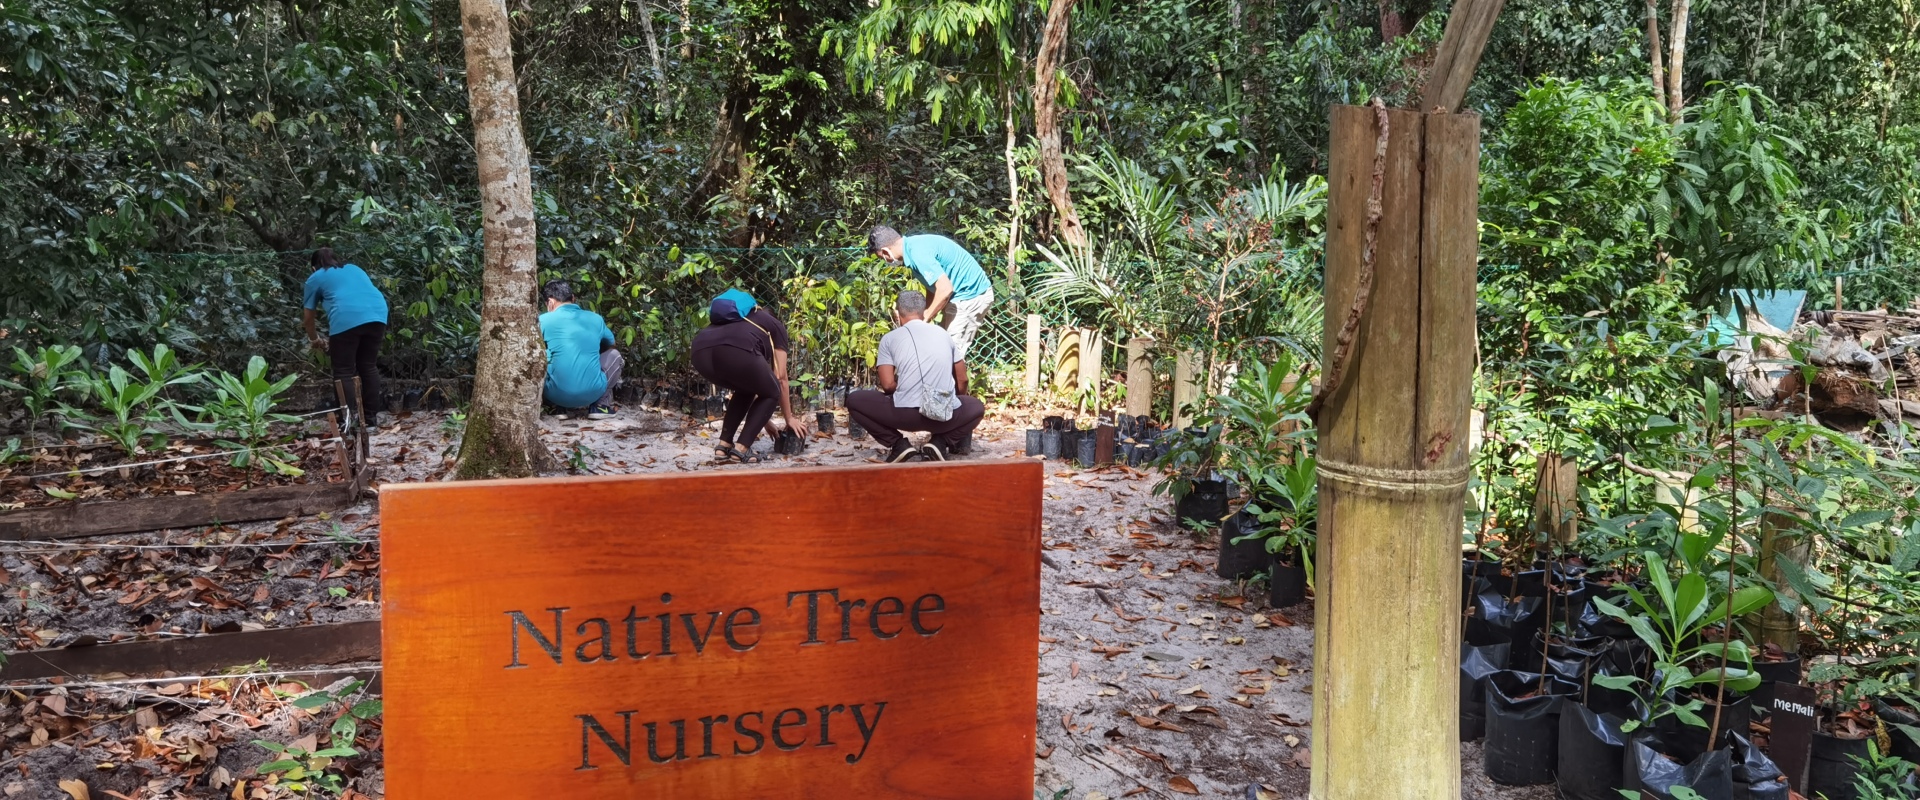 Native Tree Nursery at The Datai Langkawi